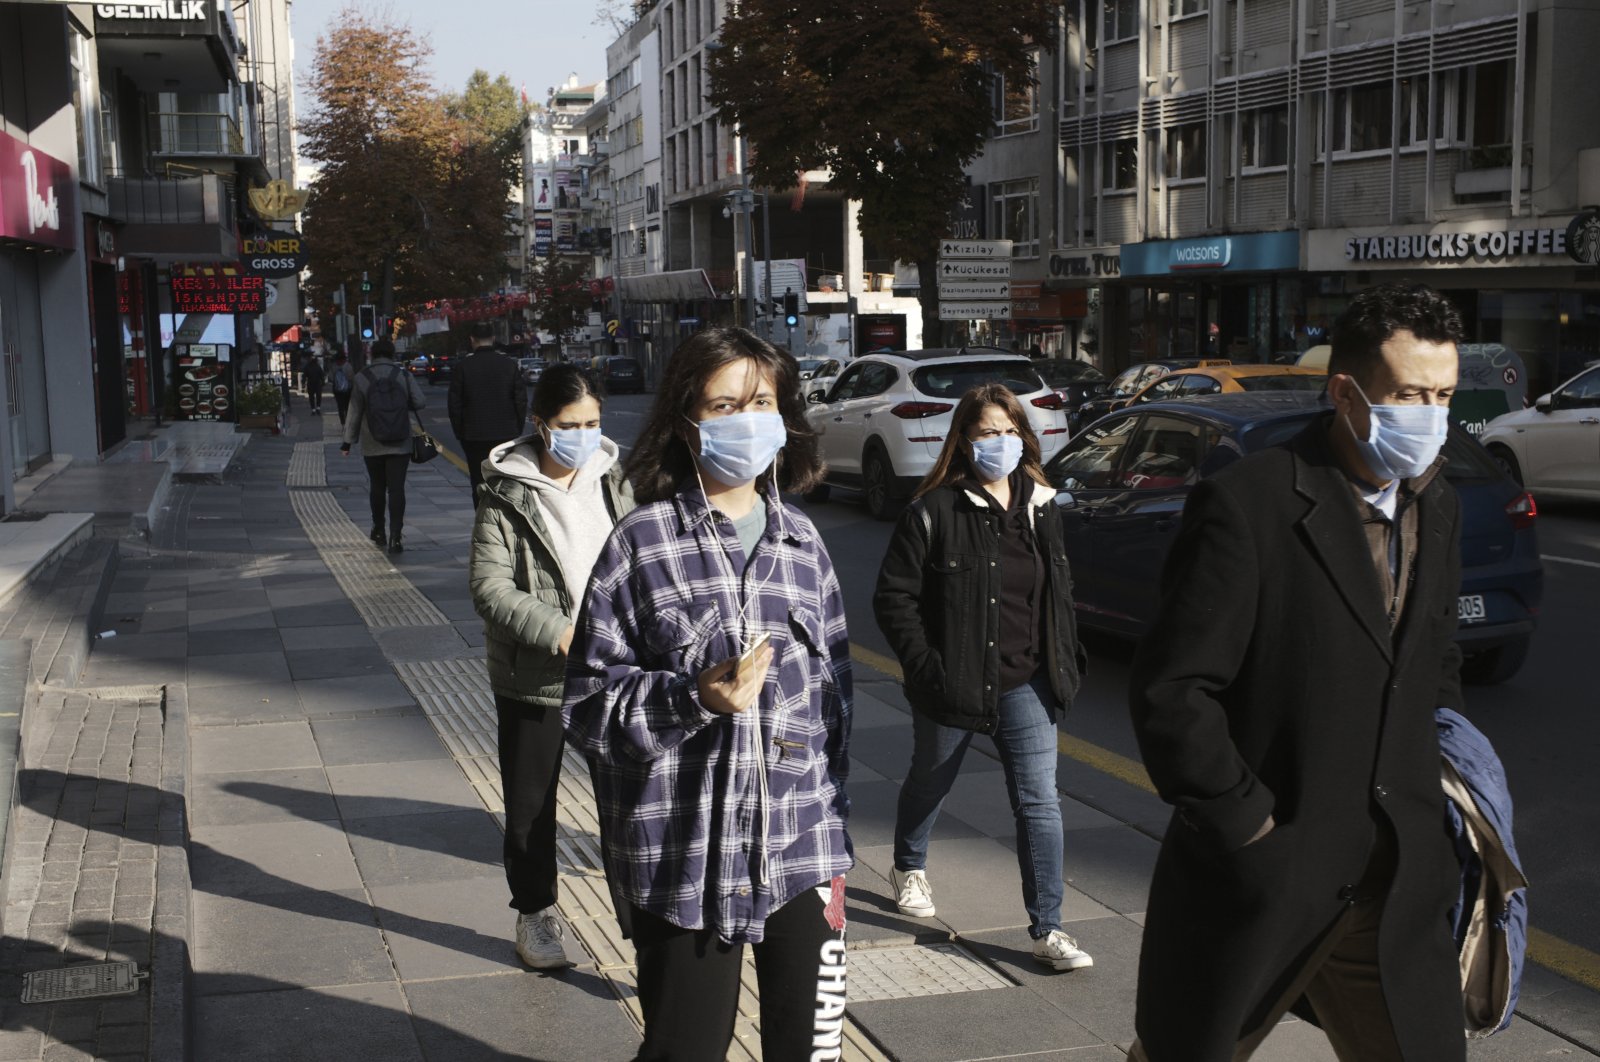 People wearing masks to help protect against the spread of coronavirus, walk, in Ankara, Turkey, Monday, Nov. 15, 2020. (AP Photo)